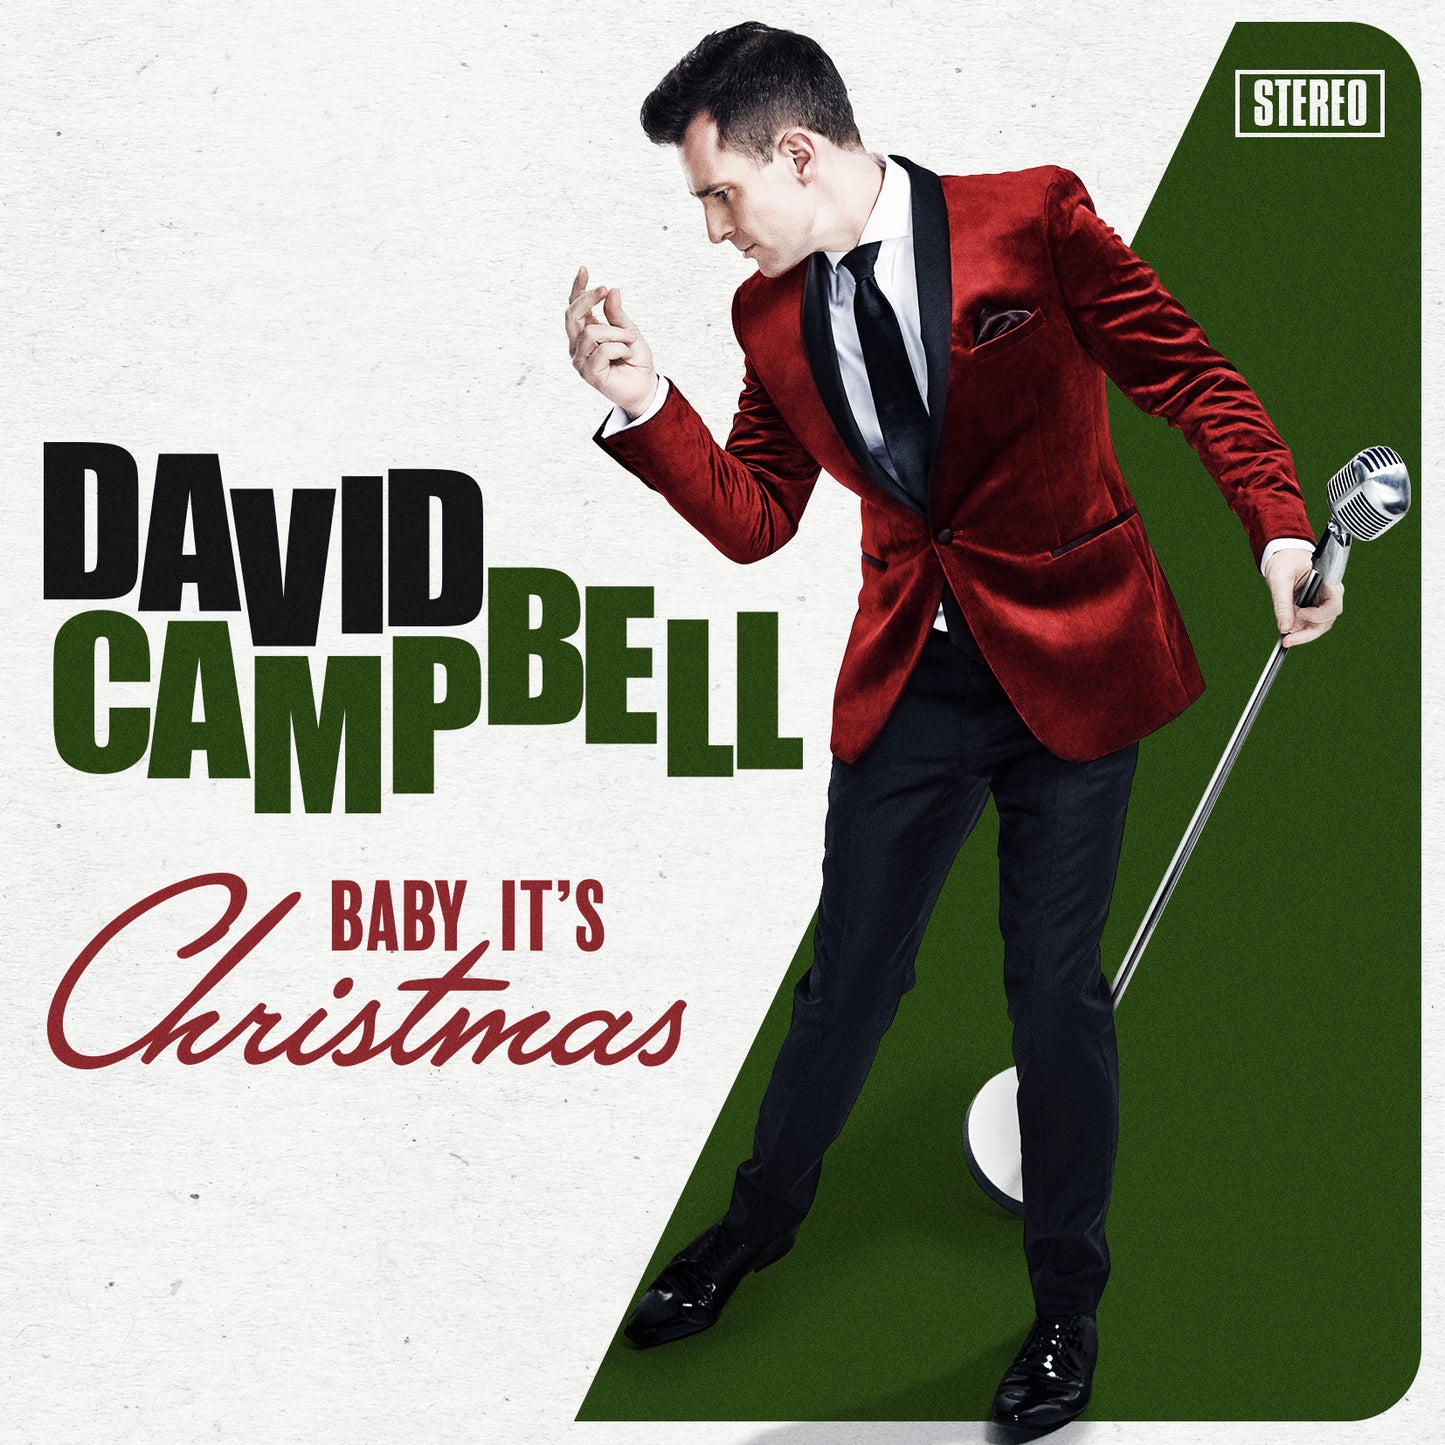 DAVID CAMPBELL - BABY IT'S CHRISTMAS CD